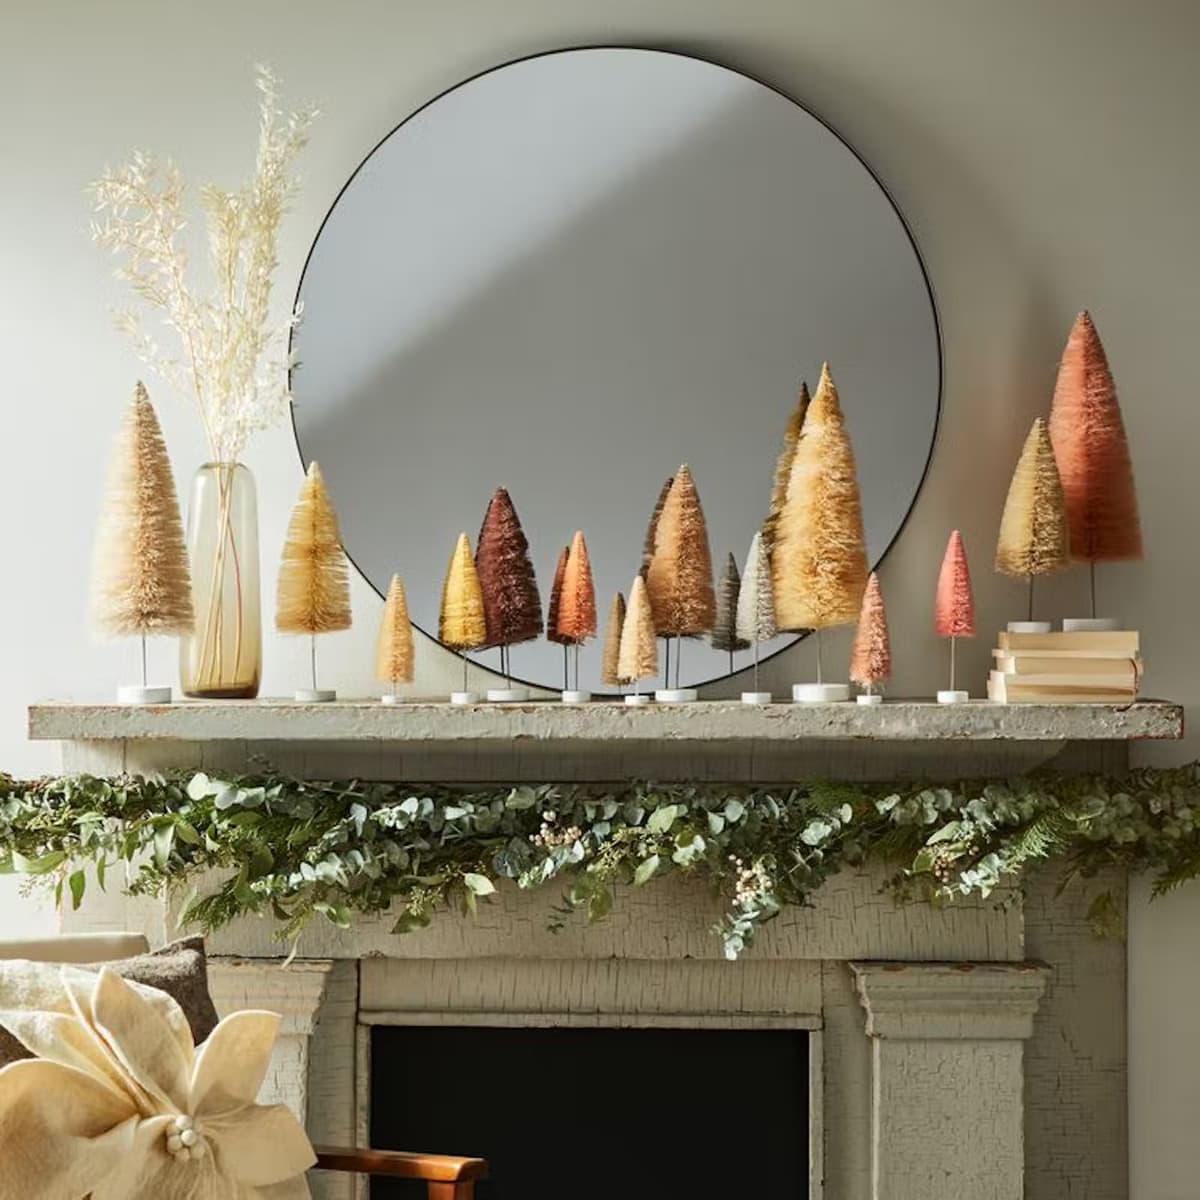 Simple Christmas decoration ideas for mantel